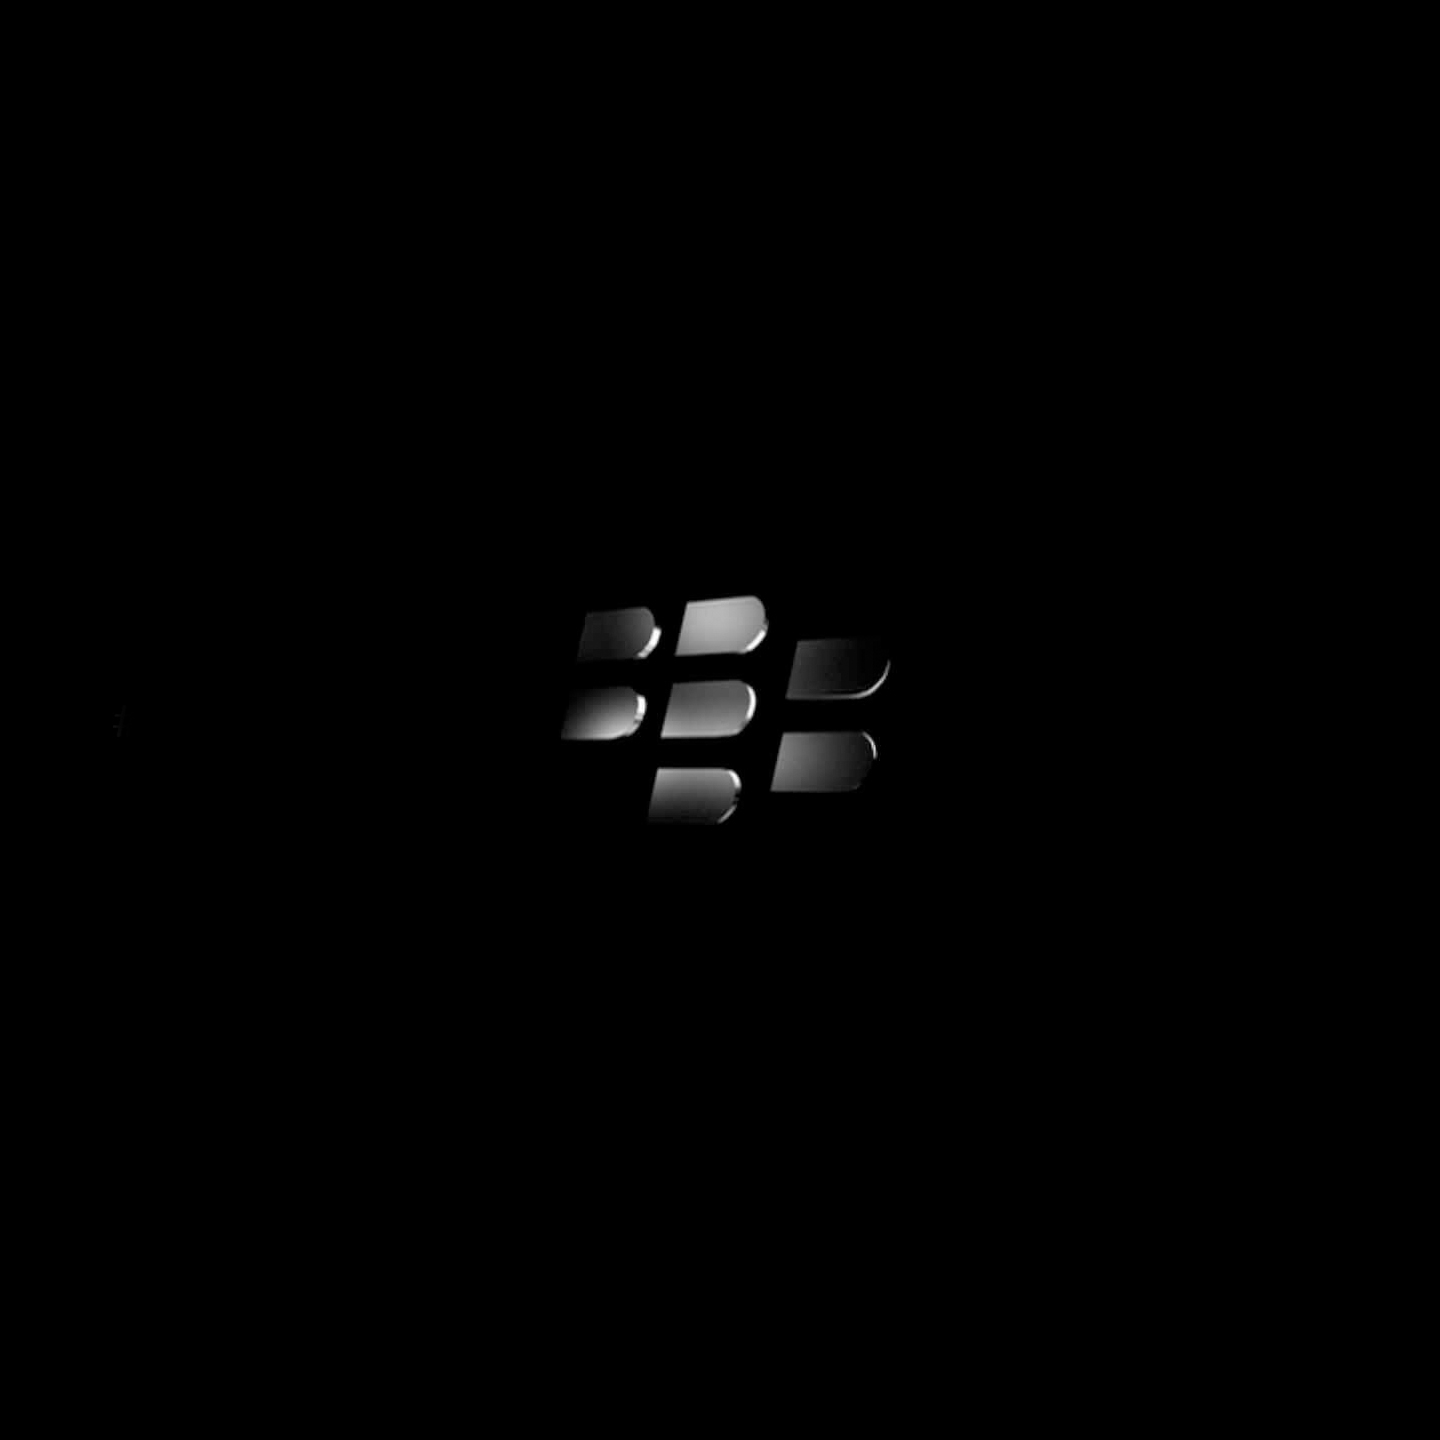 Blackberry Logo Wallpaper Image Gallery